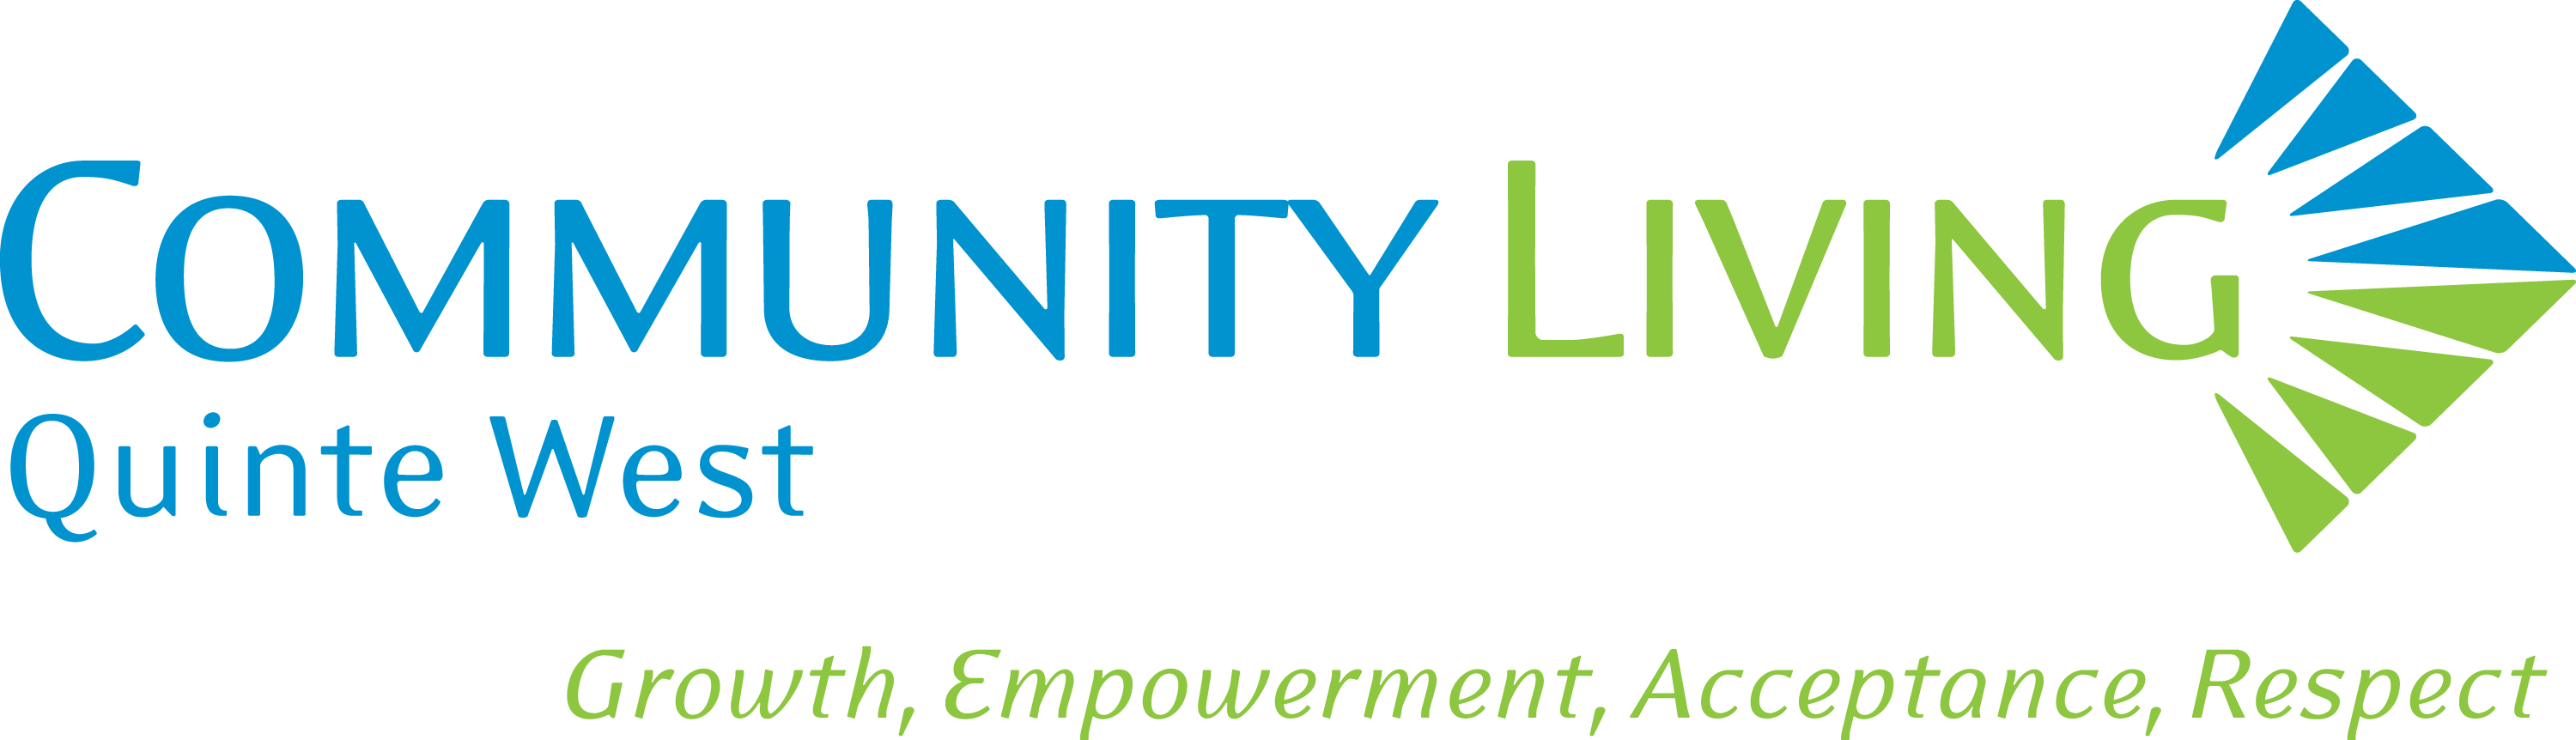 Community Living Quinte West logo